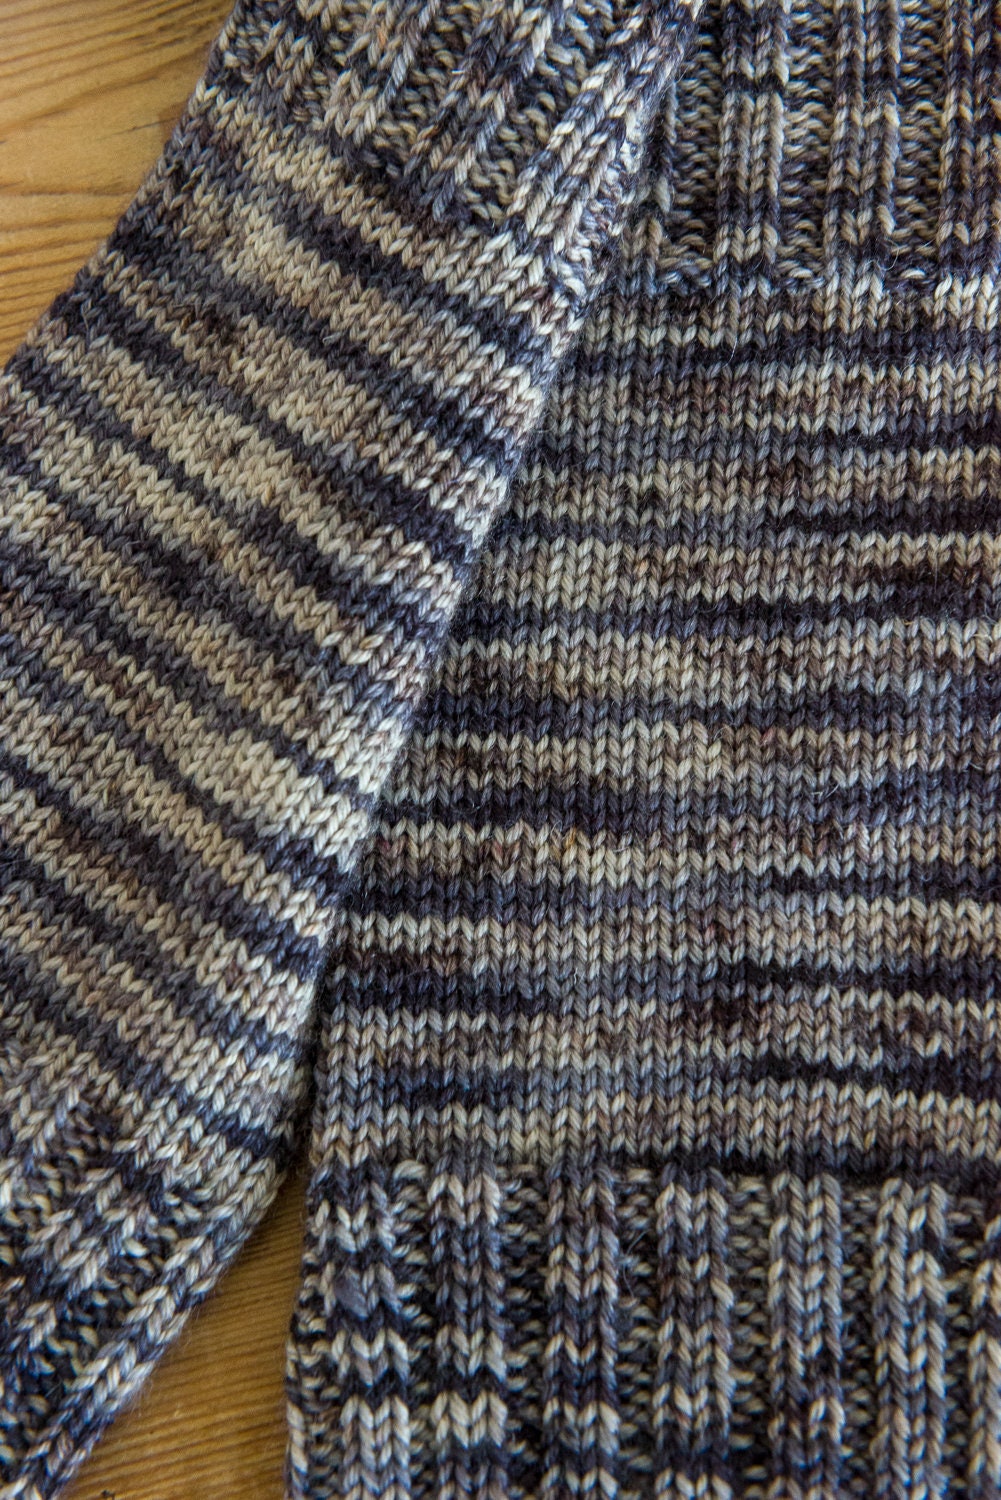 Leg Warmers knitting pattern suitable for confident beginner | Etsy